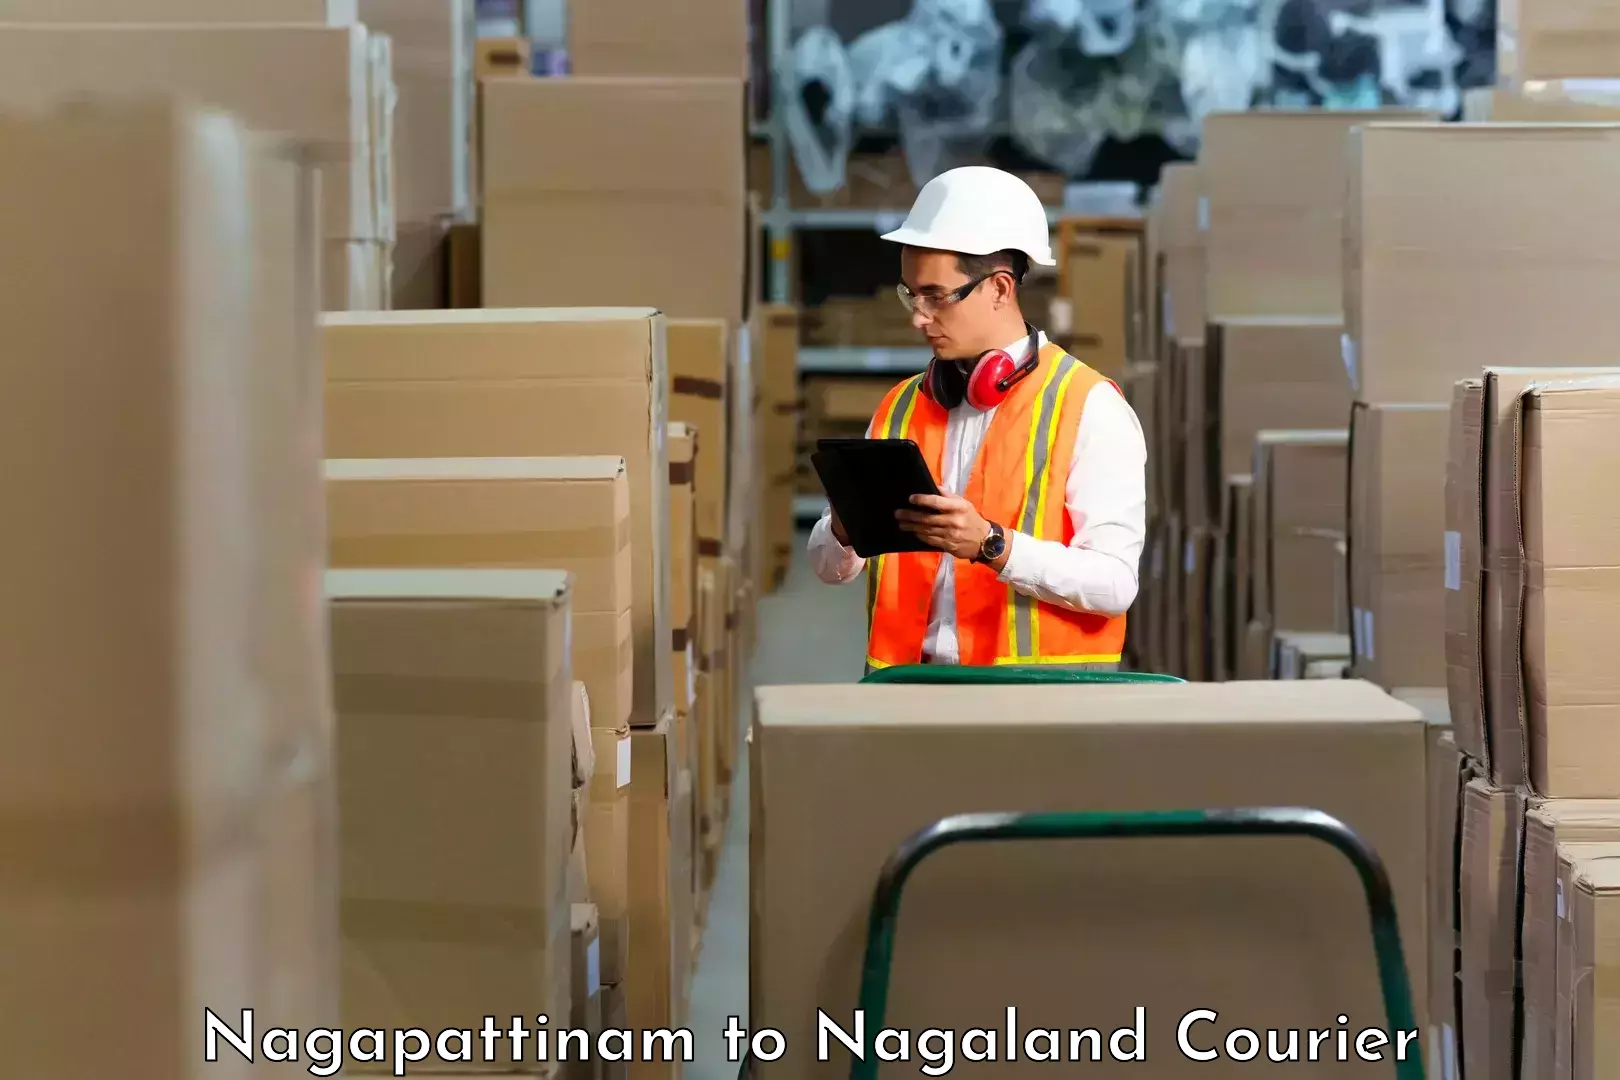 Nationwide delivery network Nagapattinam to Kohima